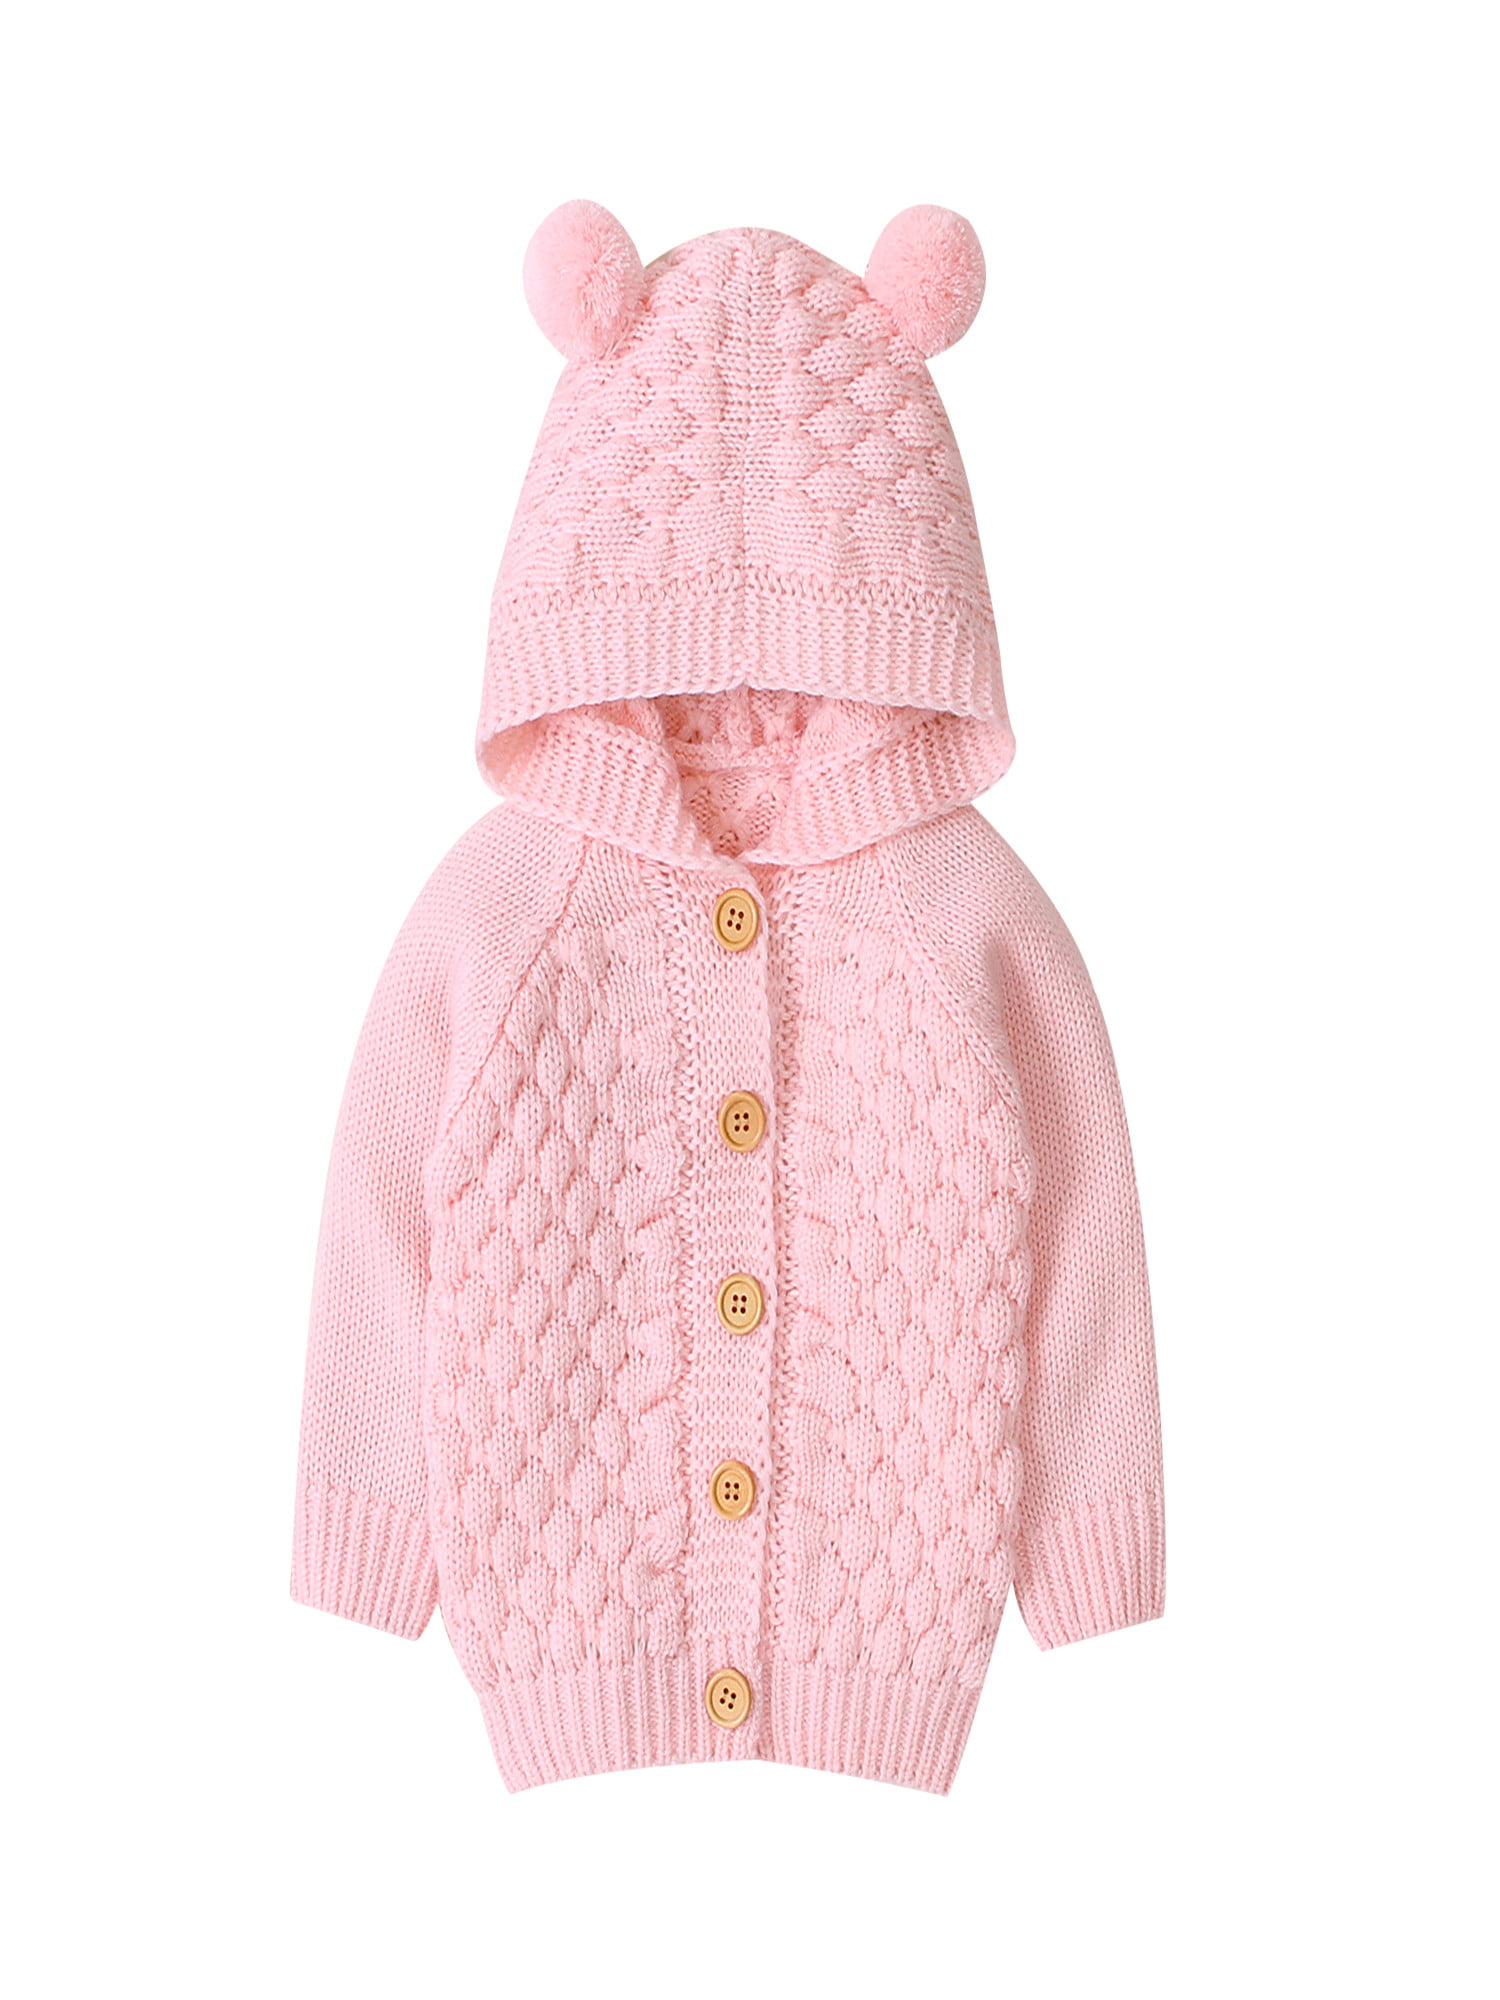 Mothercare Baby Girls Jacket Pink Bunny Rabbit Hooded Raincoat Summer Coat NEW 